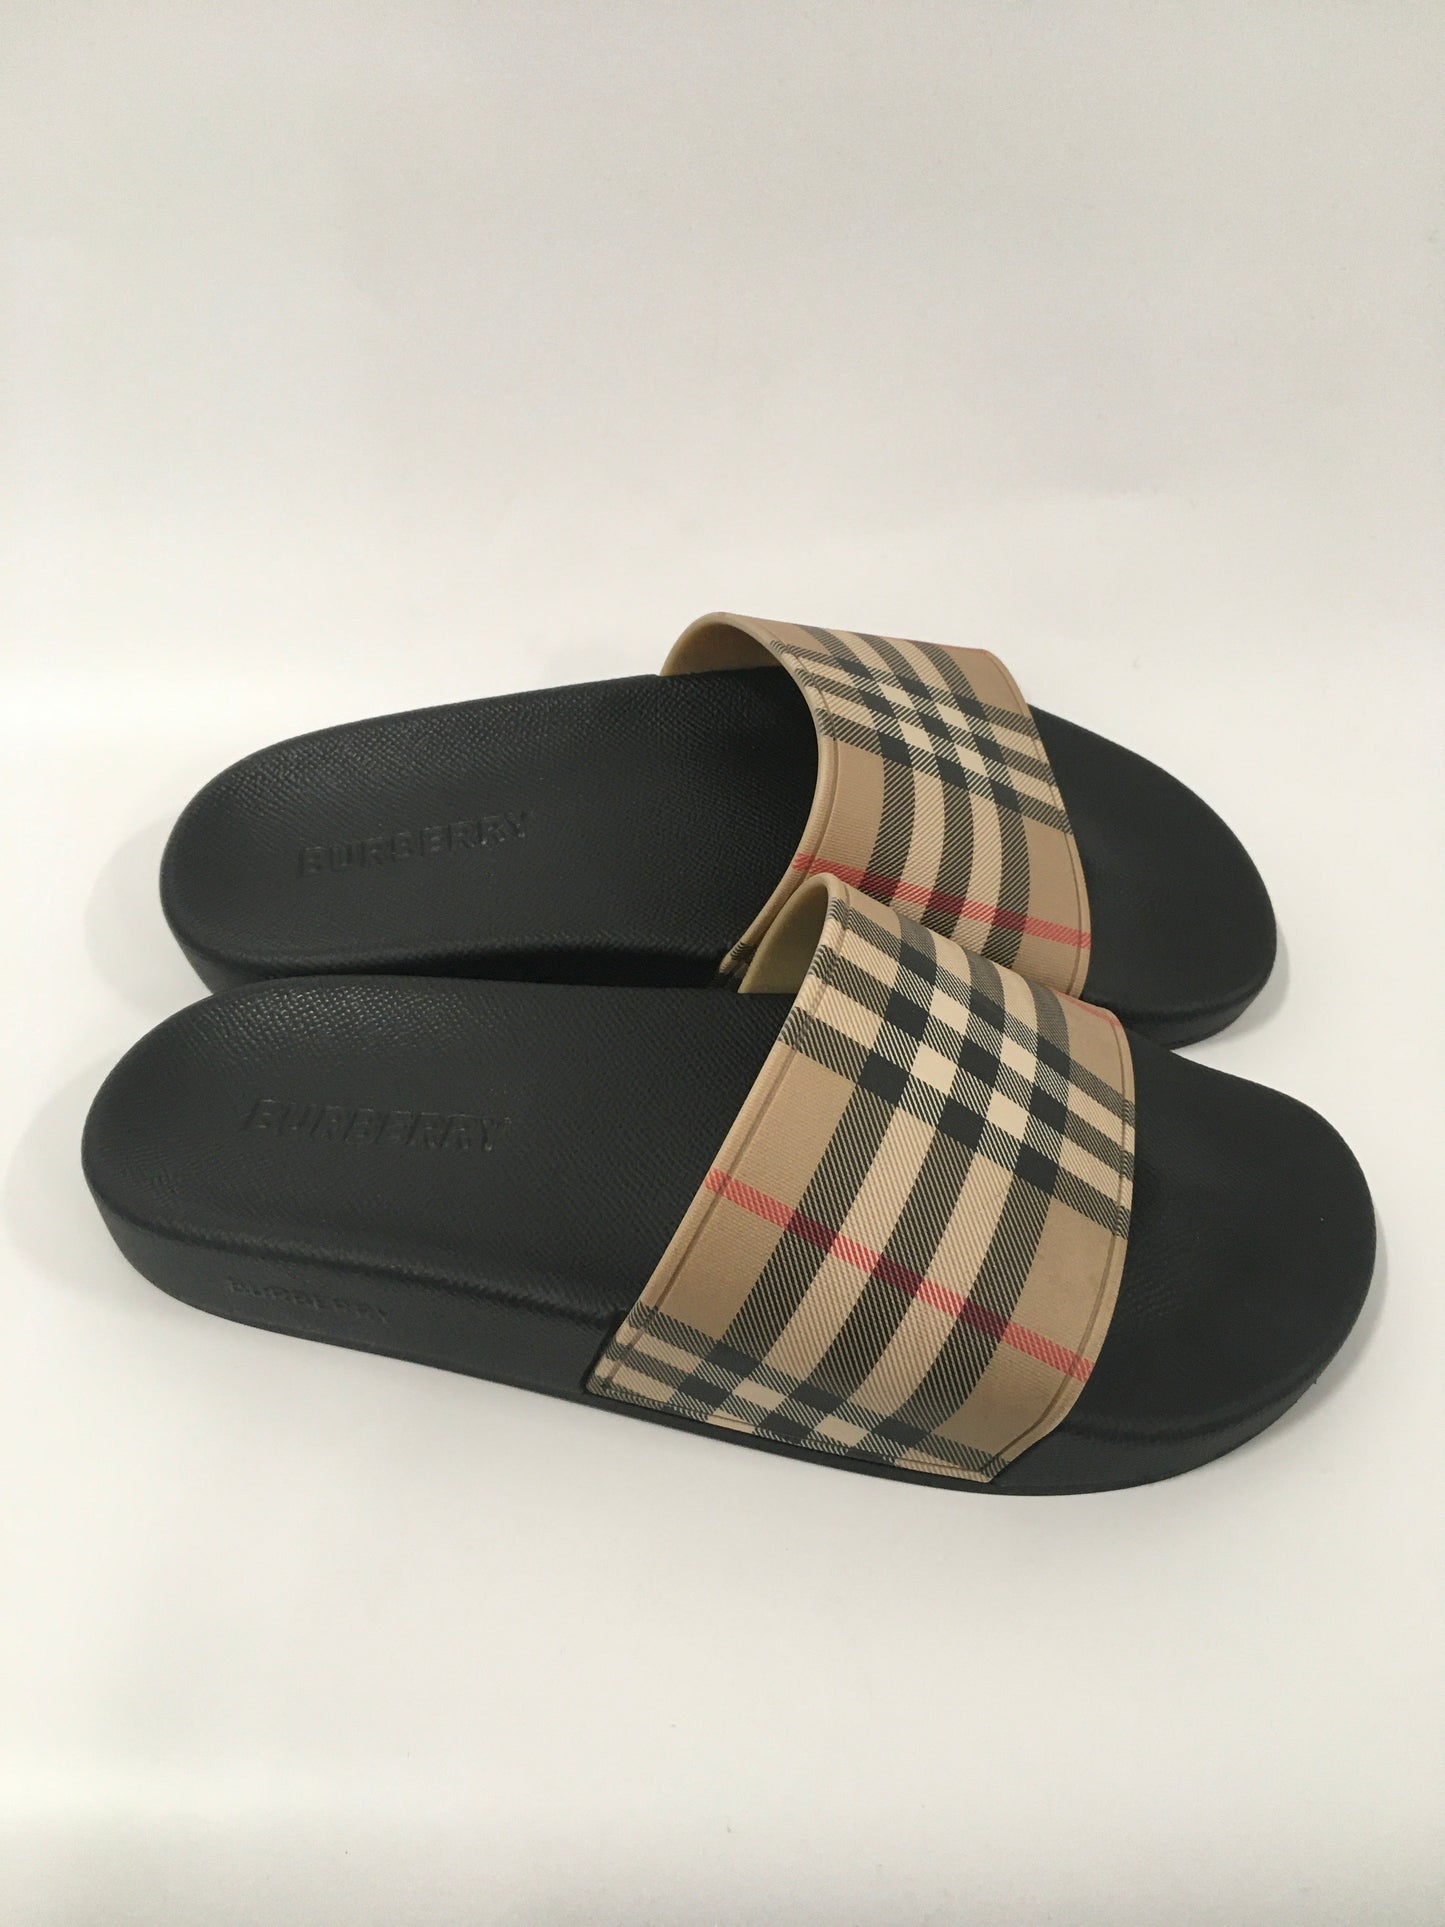 Plaid Pattern Sandals Designer Burberry, Size 8.5